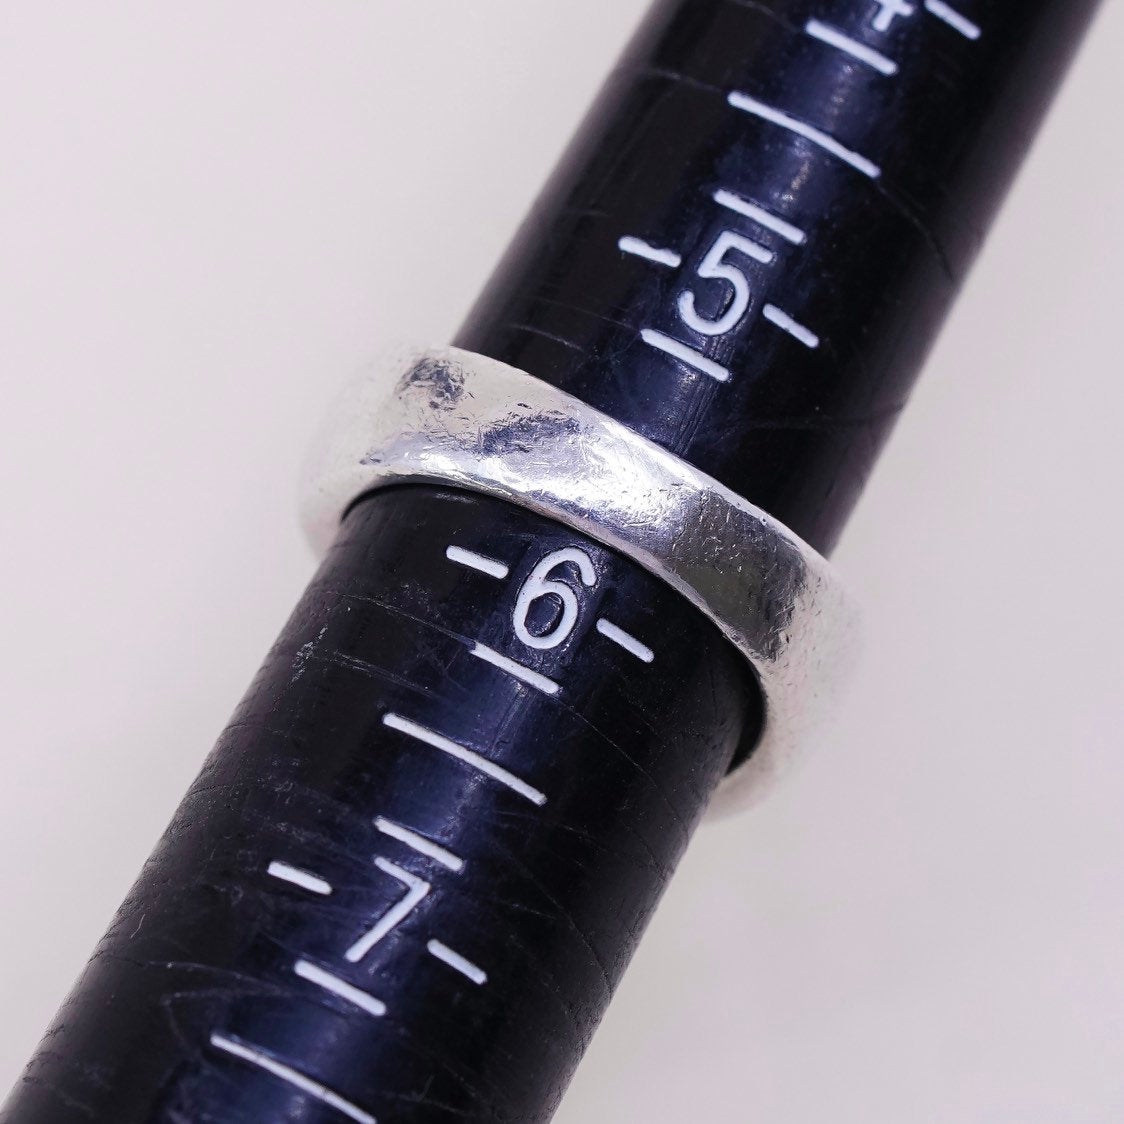 sz 5.75,vtg Sterling silver handmade ring, 925 band w/ fire opal n marquise cz